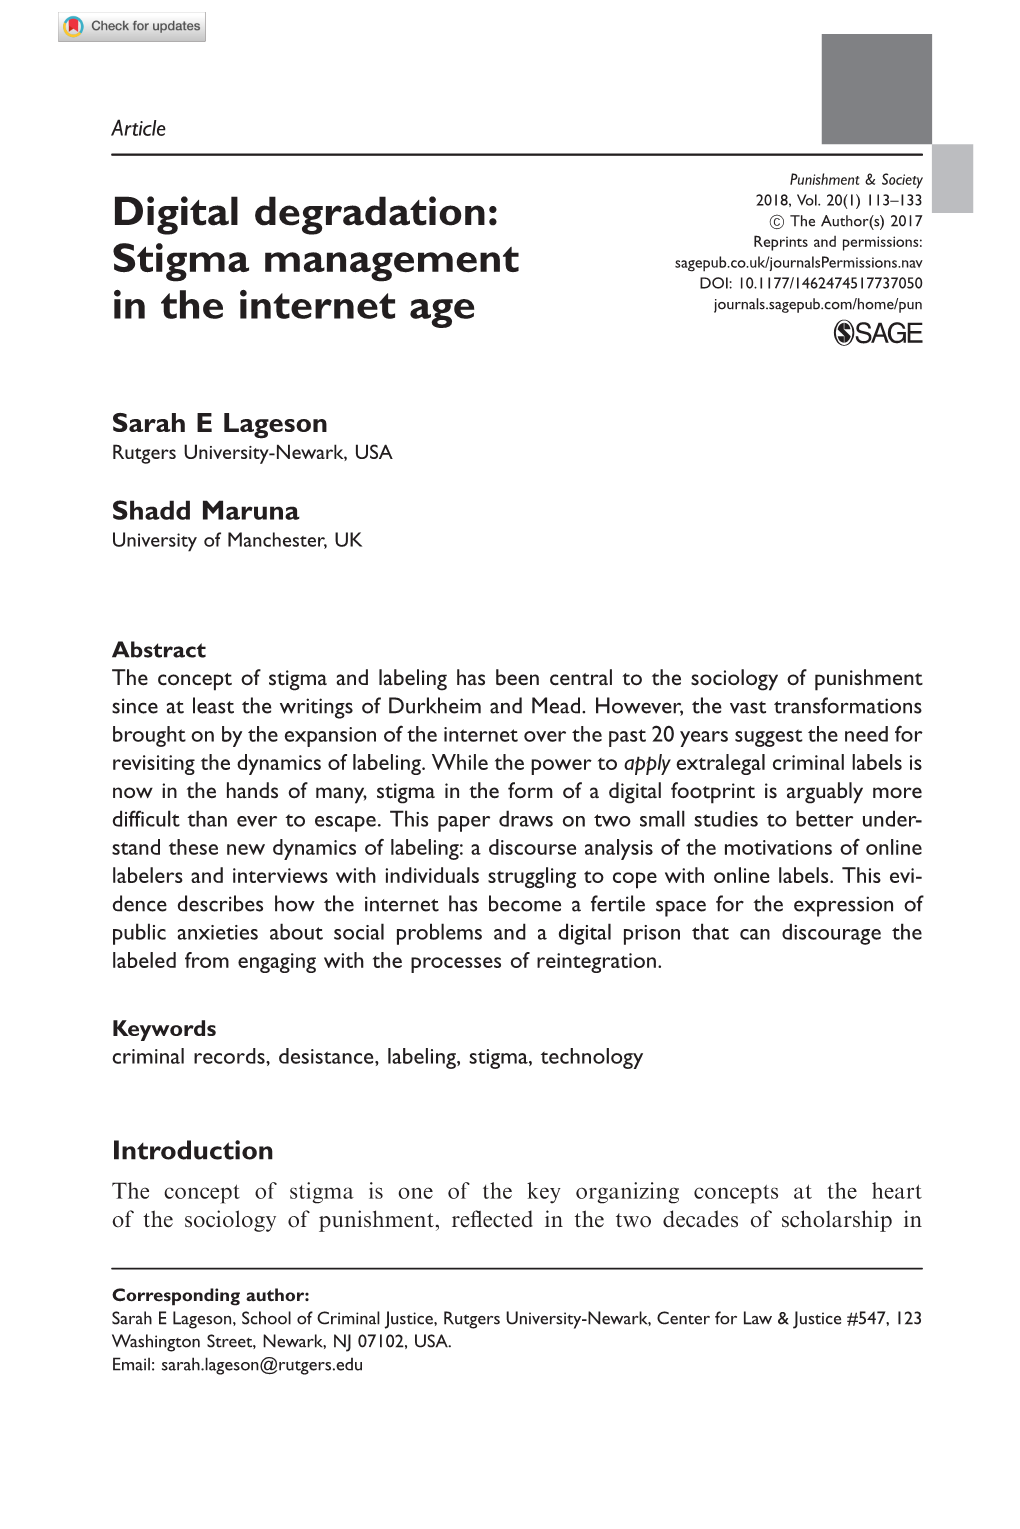 Digital Degradation: Stigma Management in the Internet